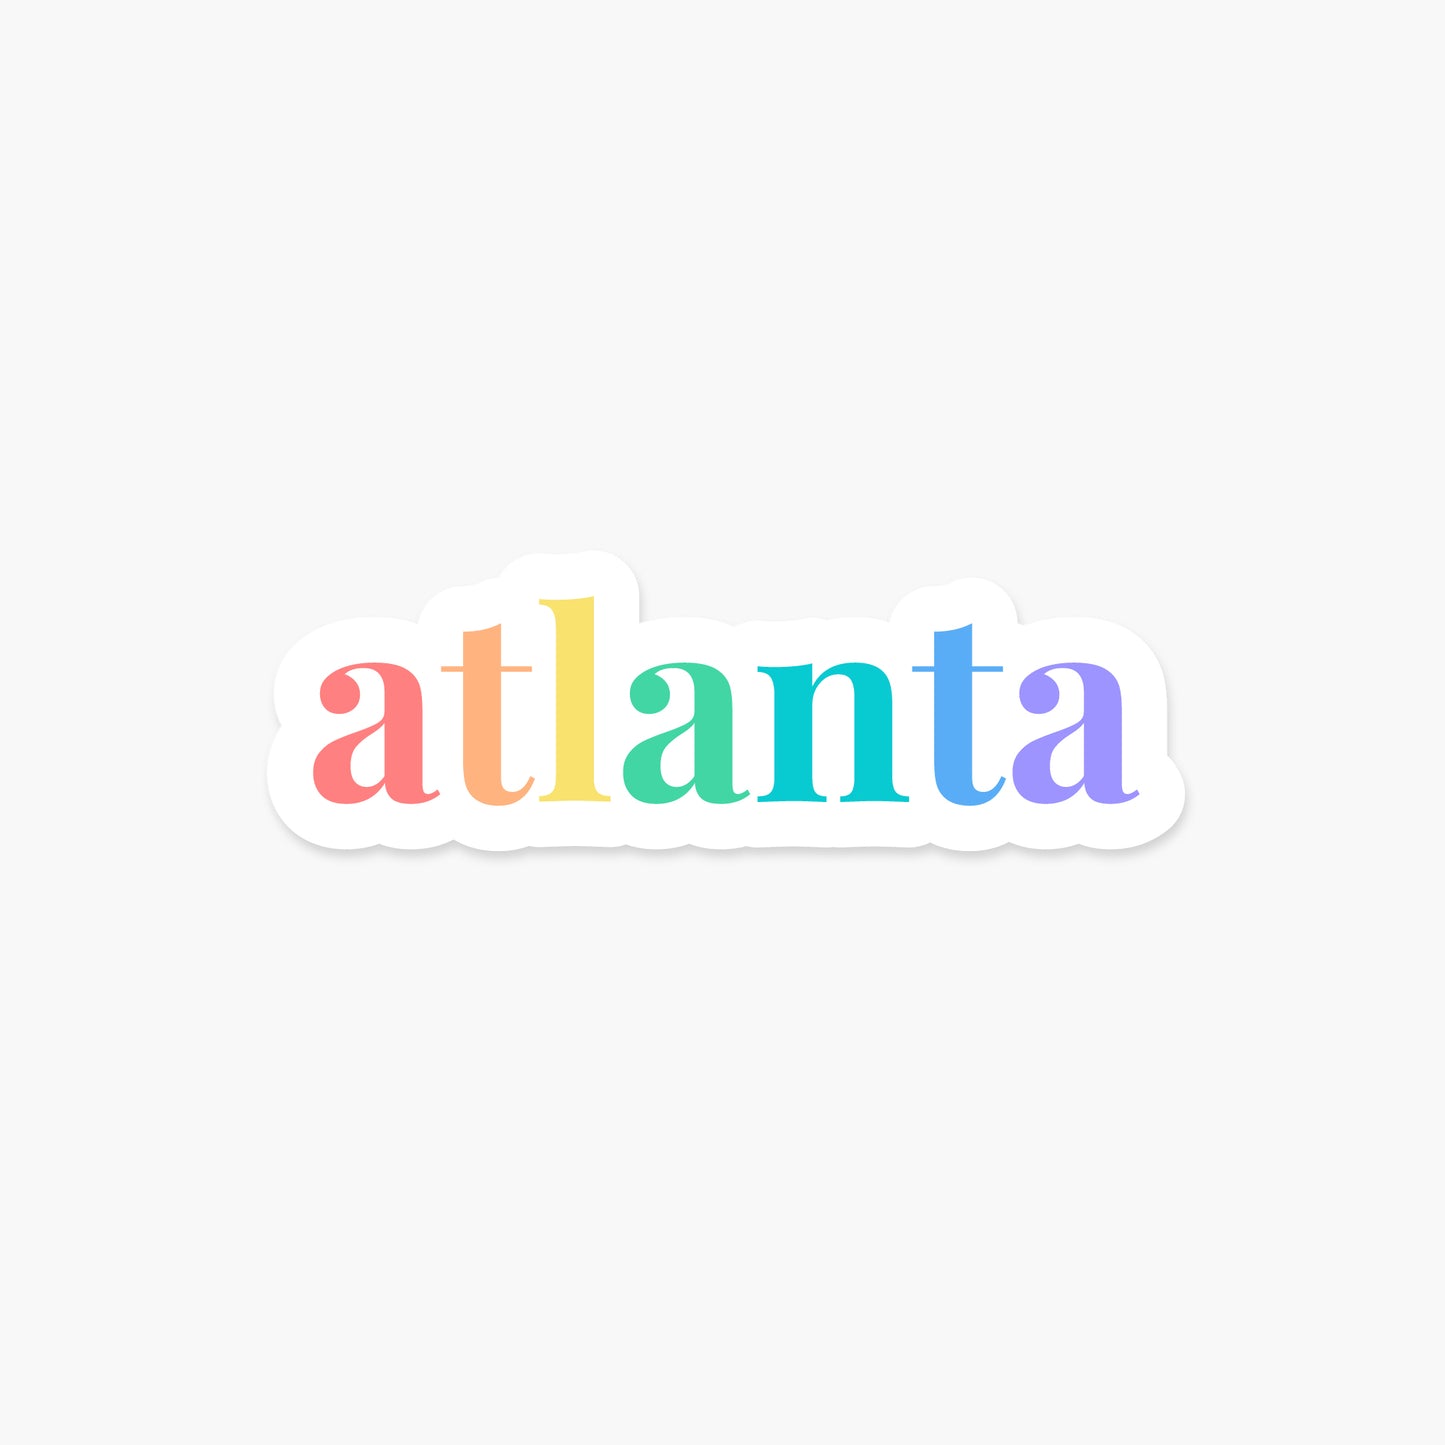 Atlanta, Georgia - Everyday Sticker | Footnotes Paper